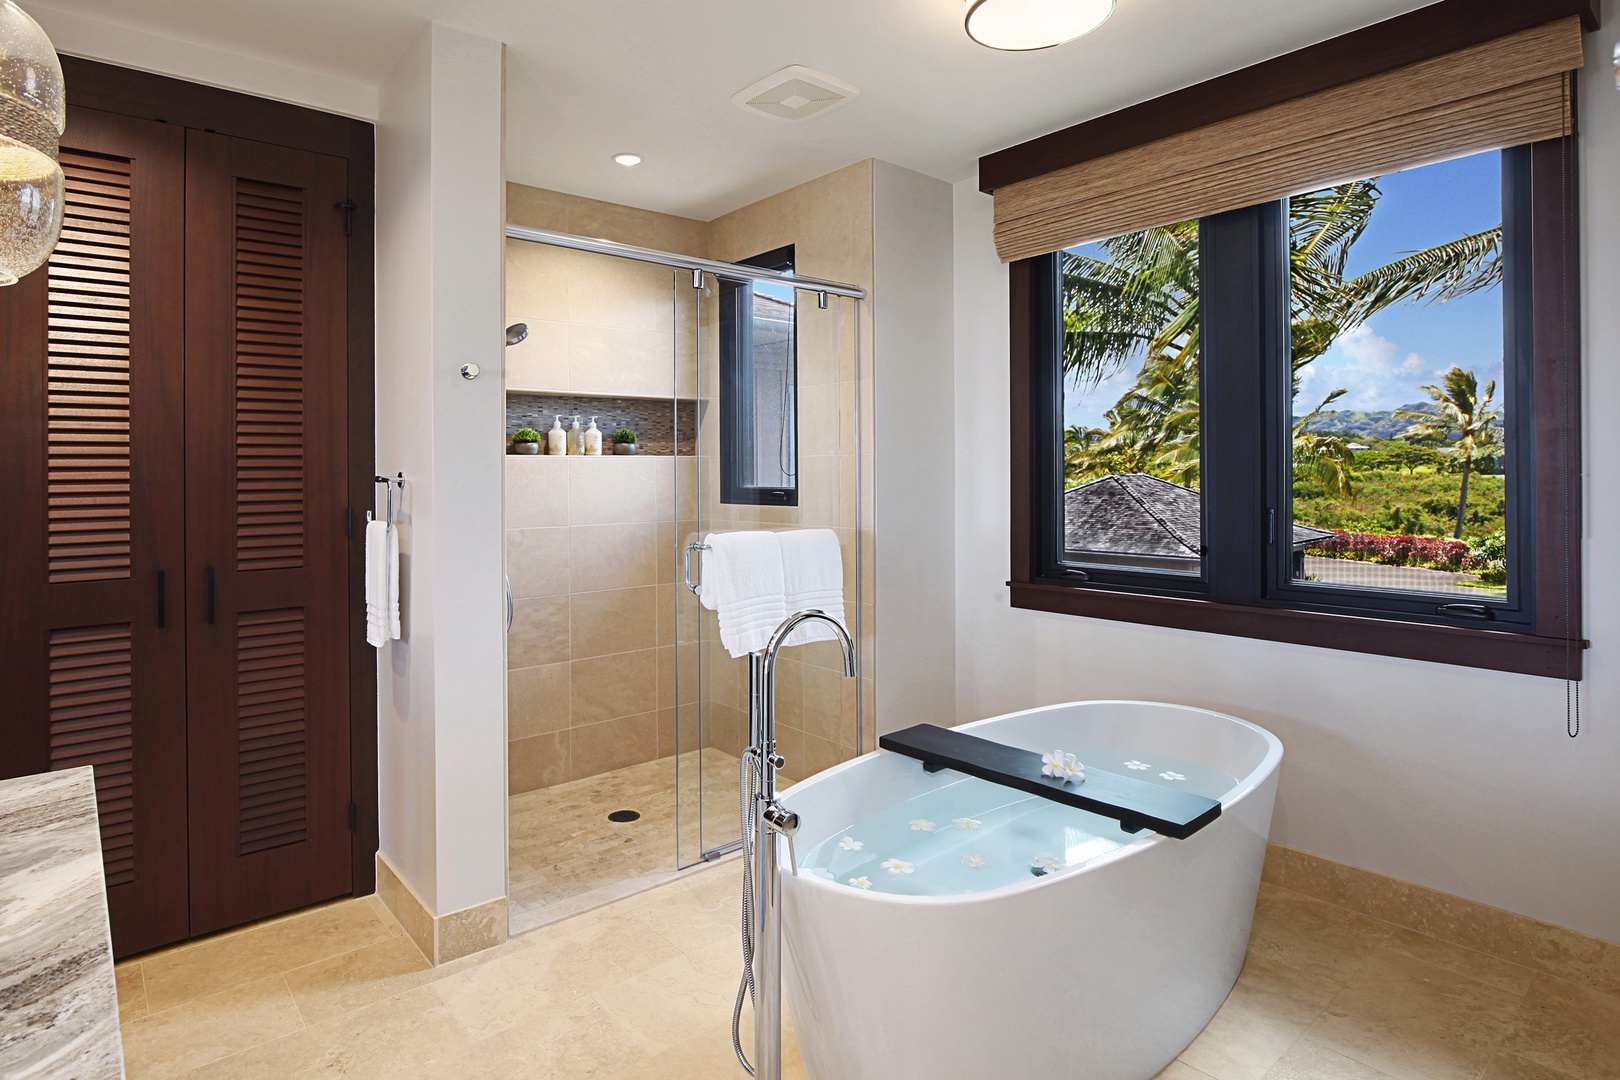 Koloa Vacation Rentals, Kainani Villa #8 - Primary bathroom soaking tub and shower